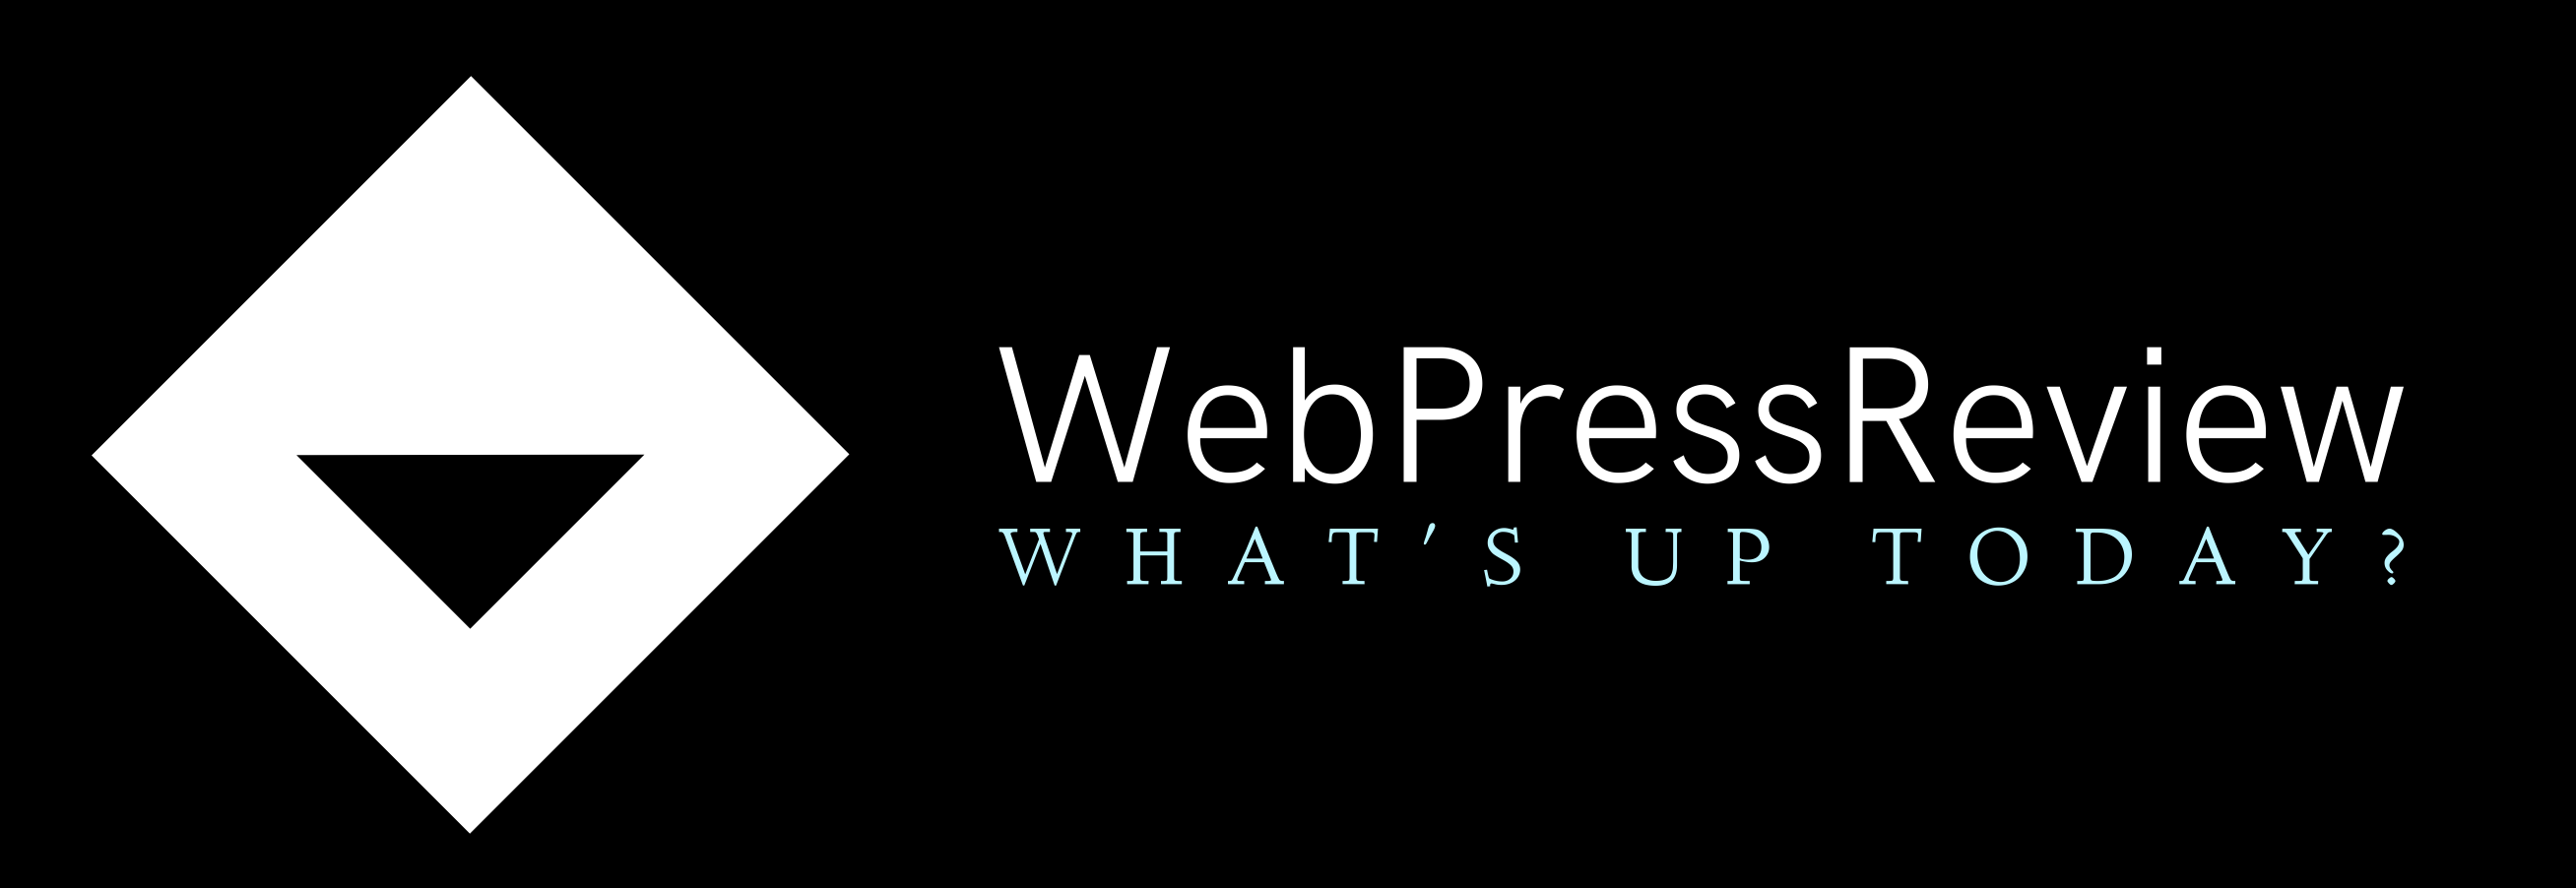 WebPressReview